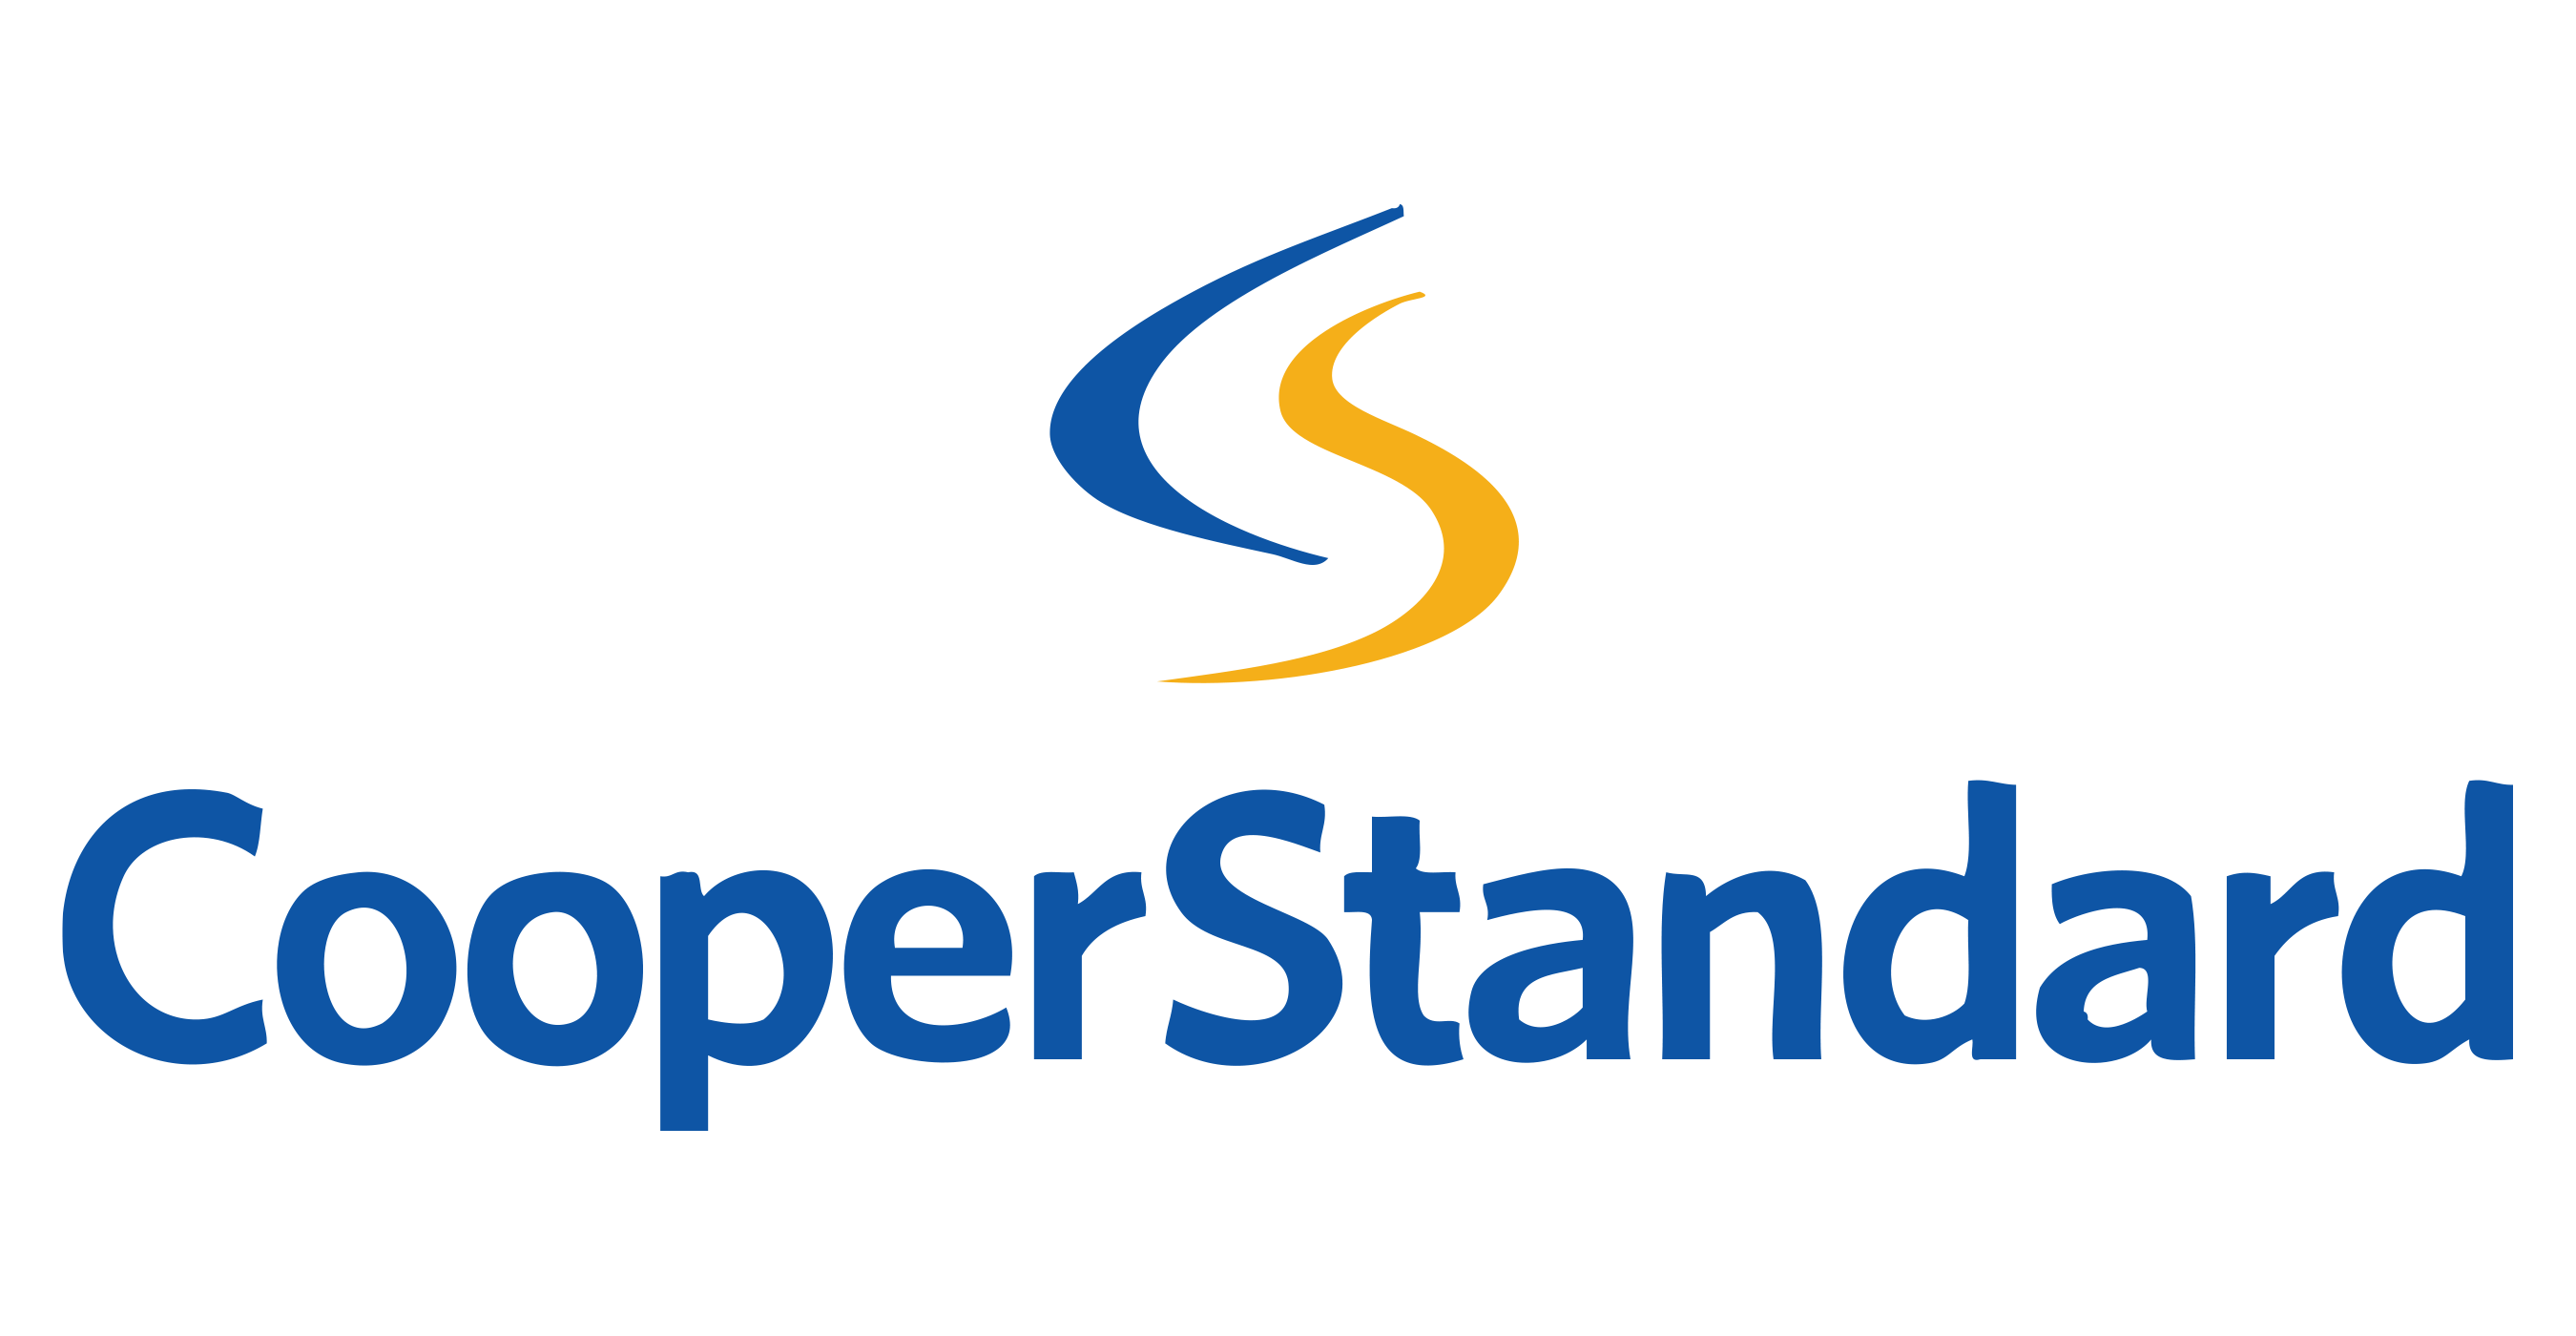 Cooper Standard Automotive Logo - Cooper Standard Employee Offer International Speedway